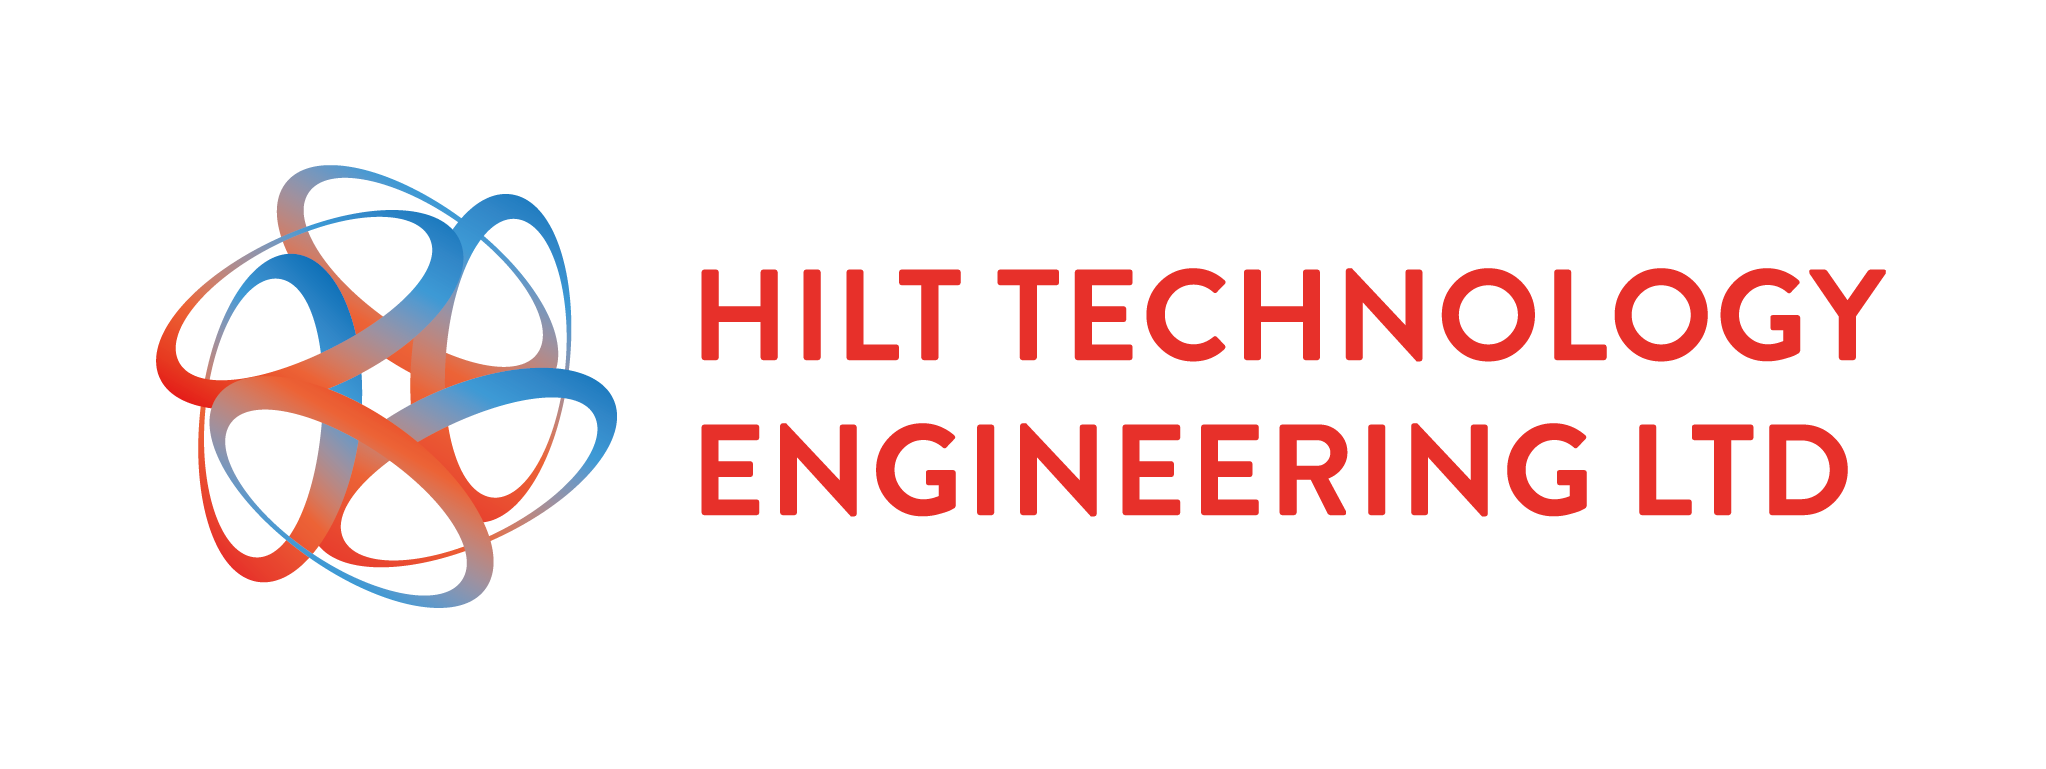 Hilt Technology Engineering LTD